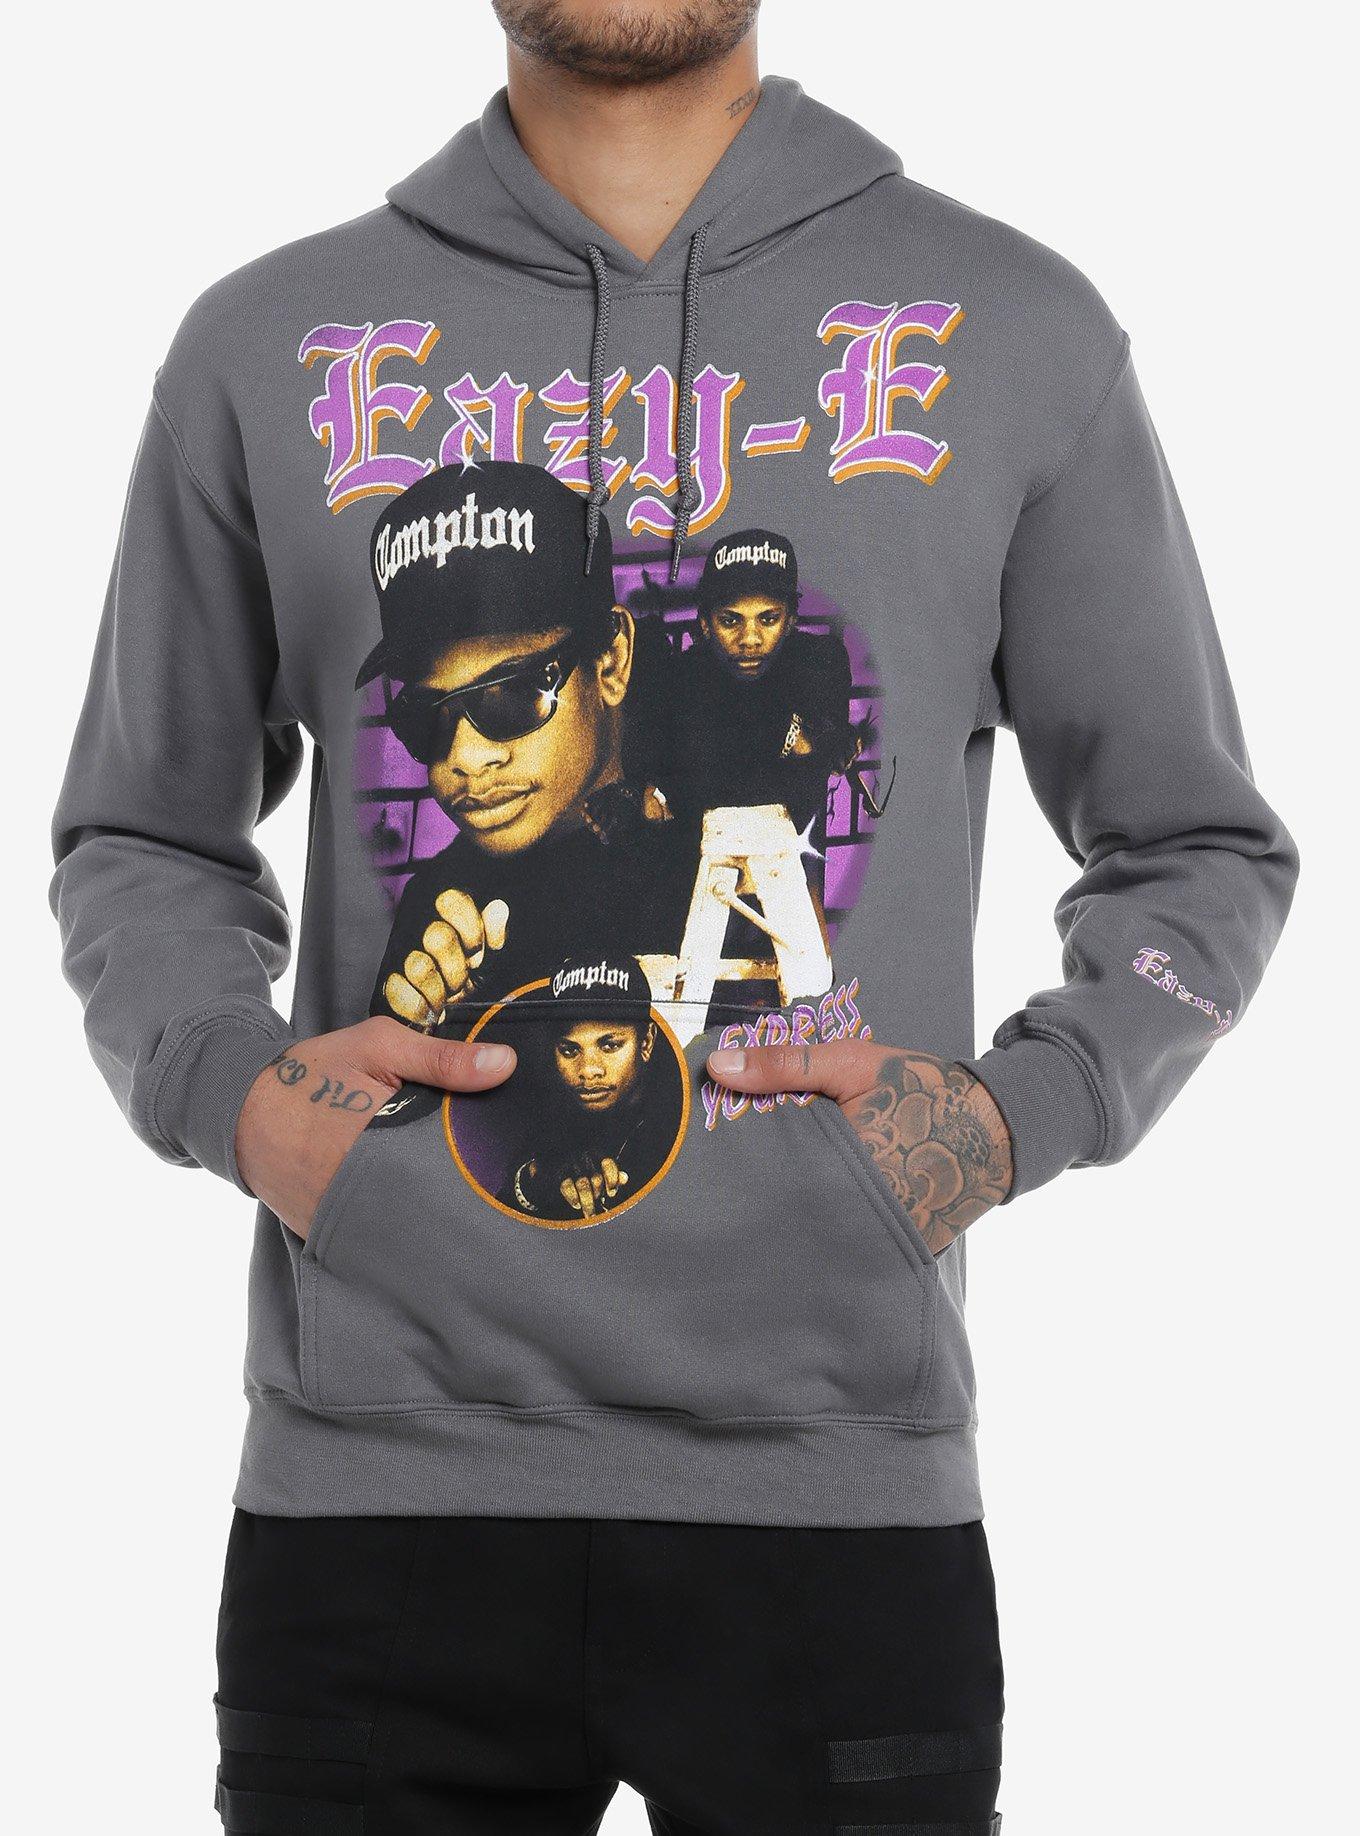 Eazy-E Express Yourself Hoodie